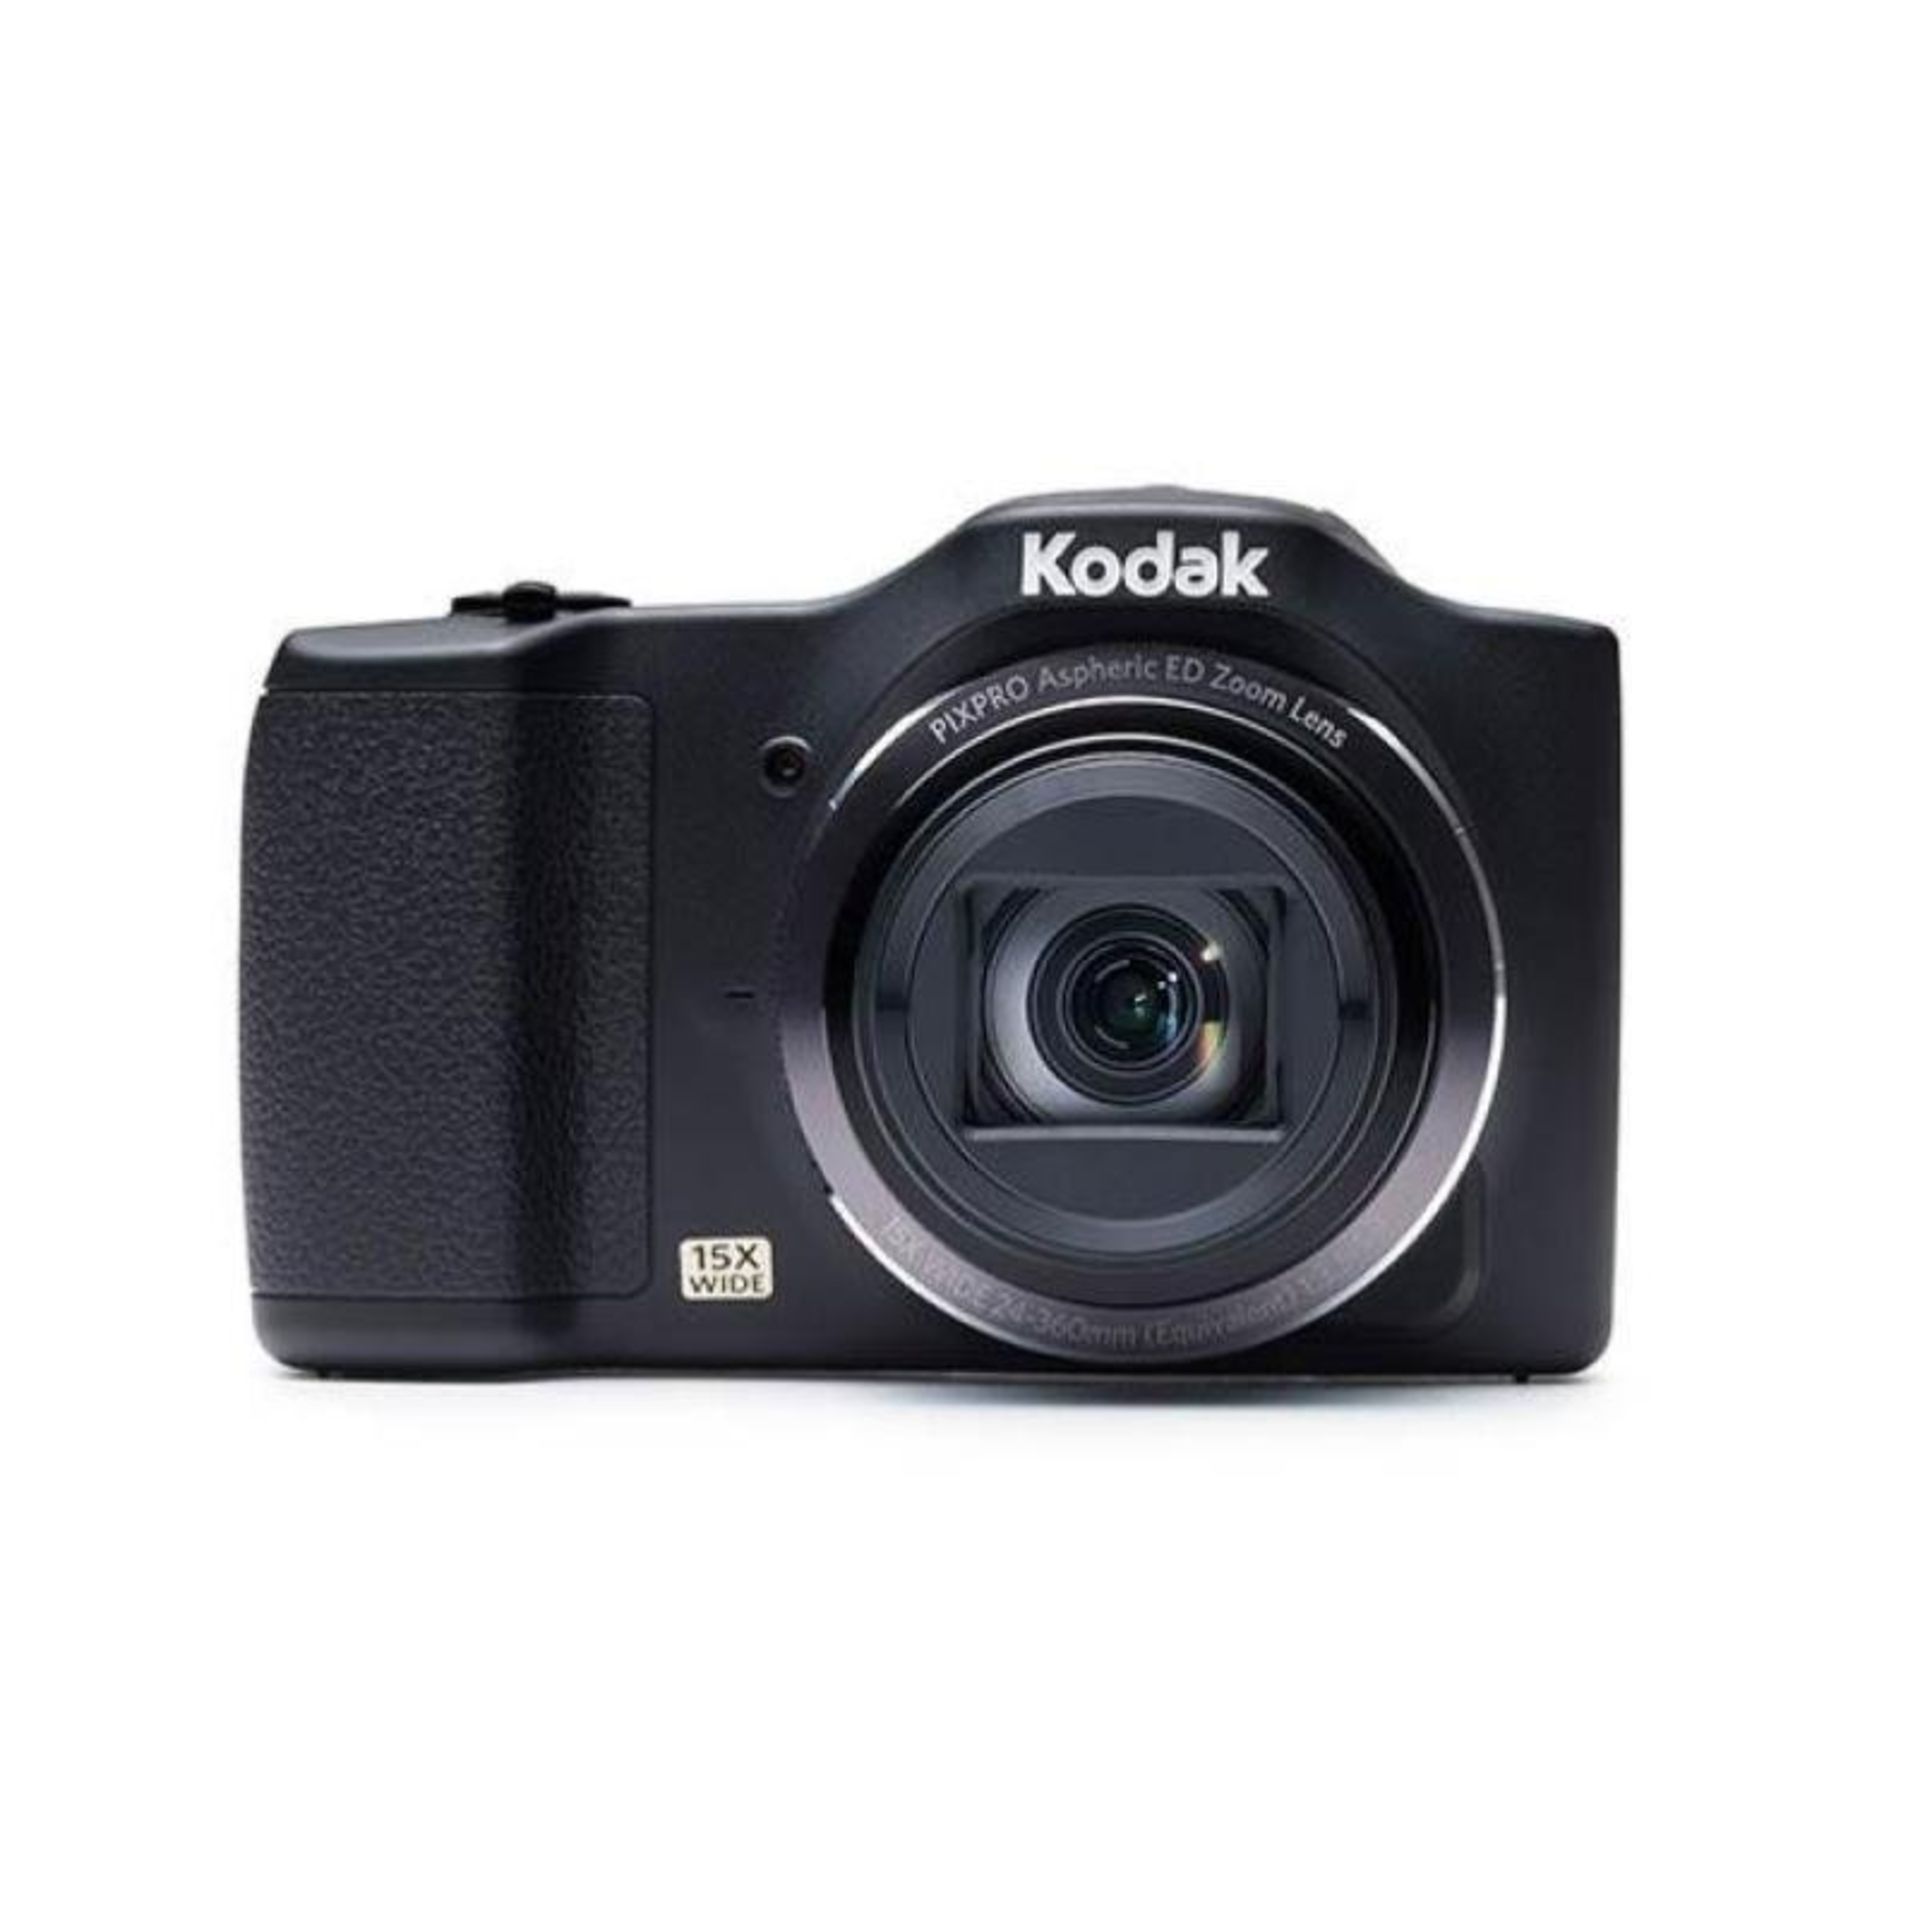 (43) 1 x Grade B - Kodak PIXPRO FZ152 Camera 16MP 15xZoom 3.0LCD 24mm Wide Lens OIS HD Black. - Image 3 of 3